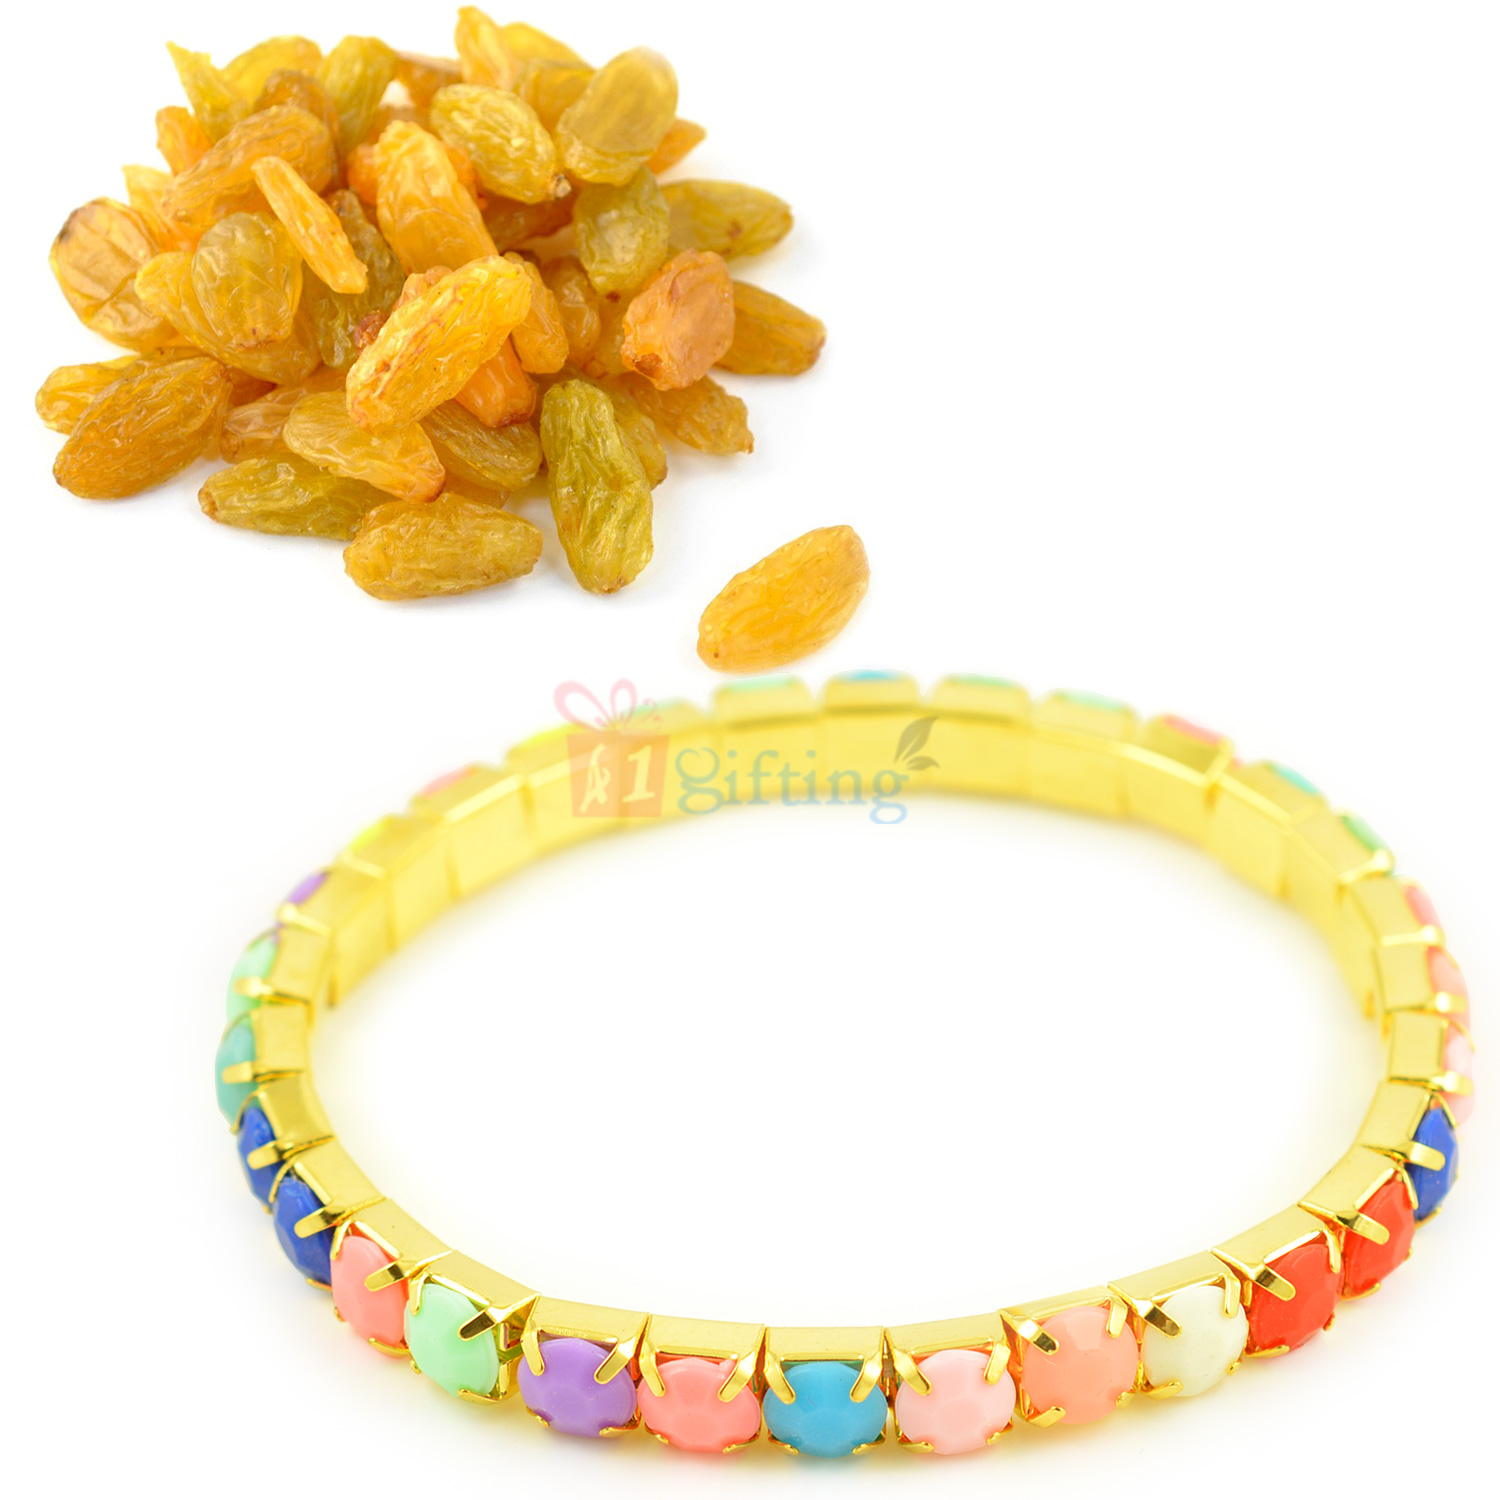 Colorful Stone Golden Bracelet with Dry Kishmish Hamper